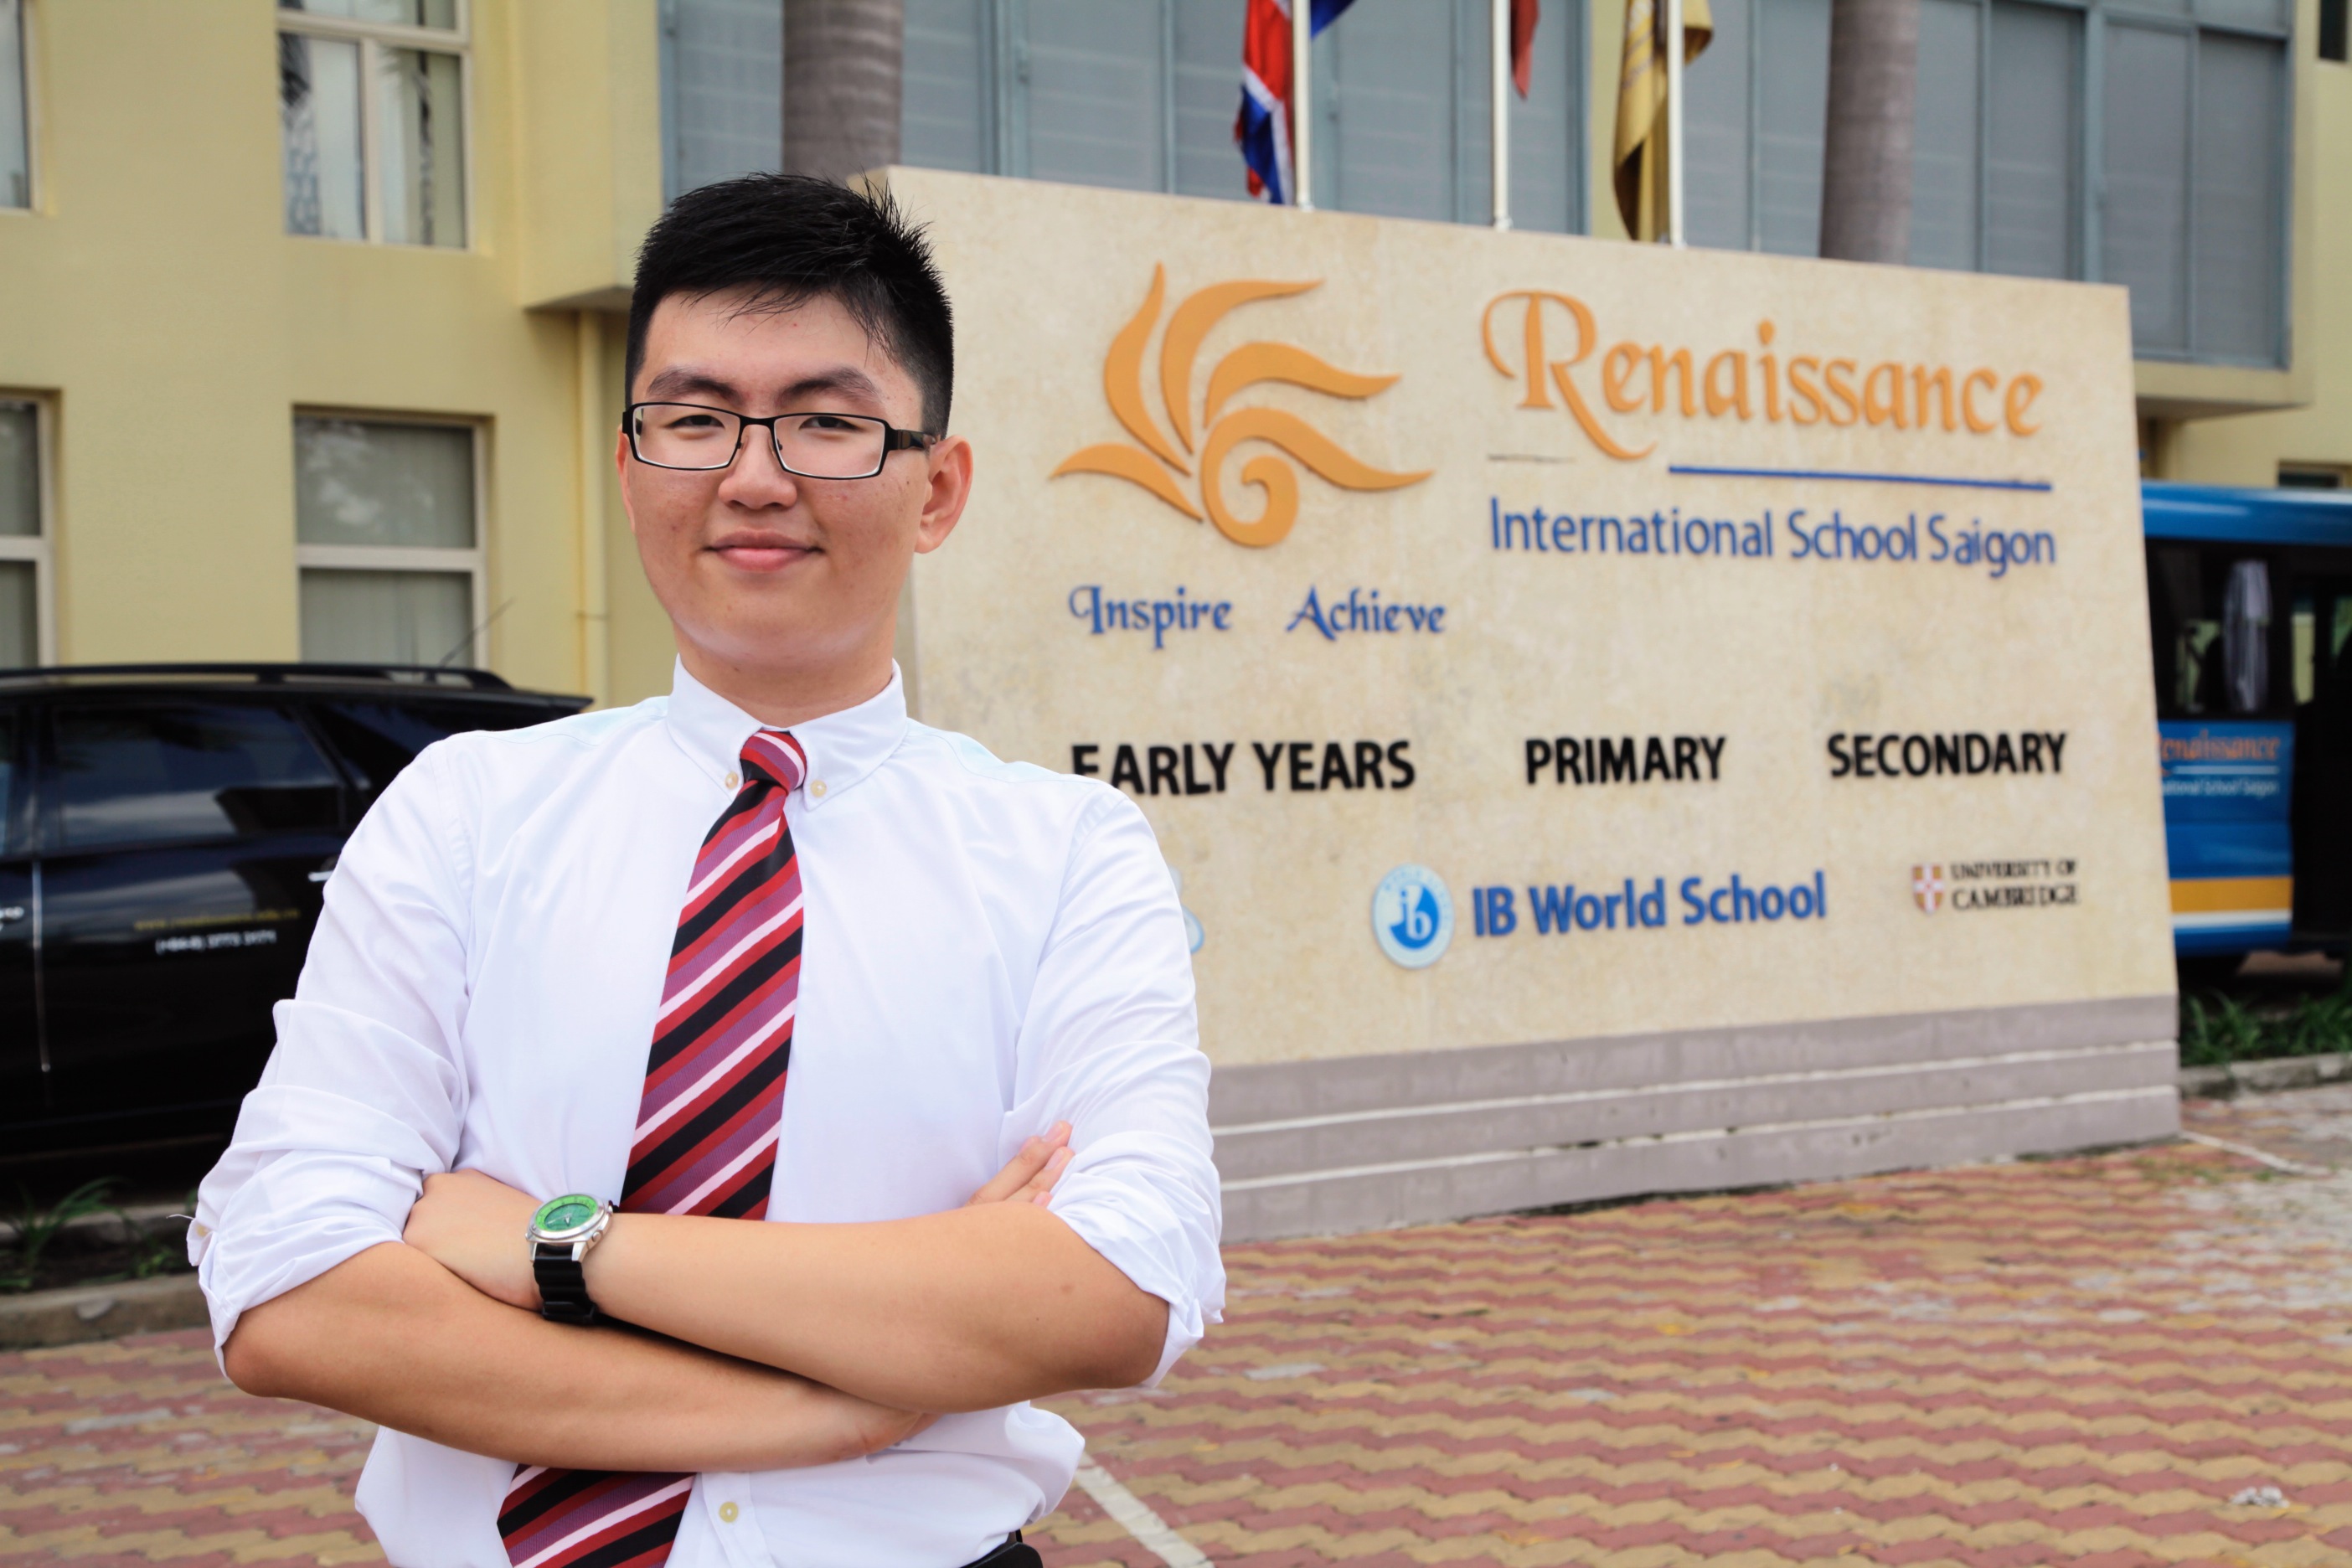 Renaissance International School Saigon: The Place that Trains Young Leaders